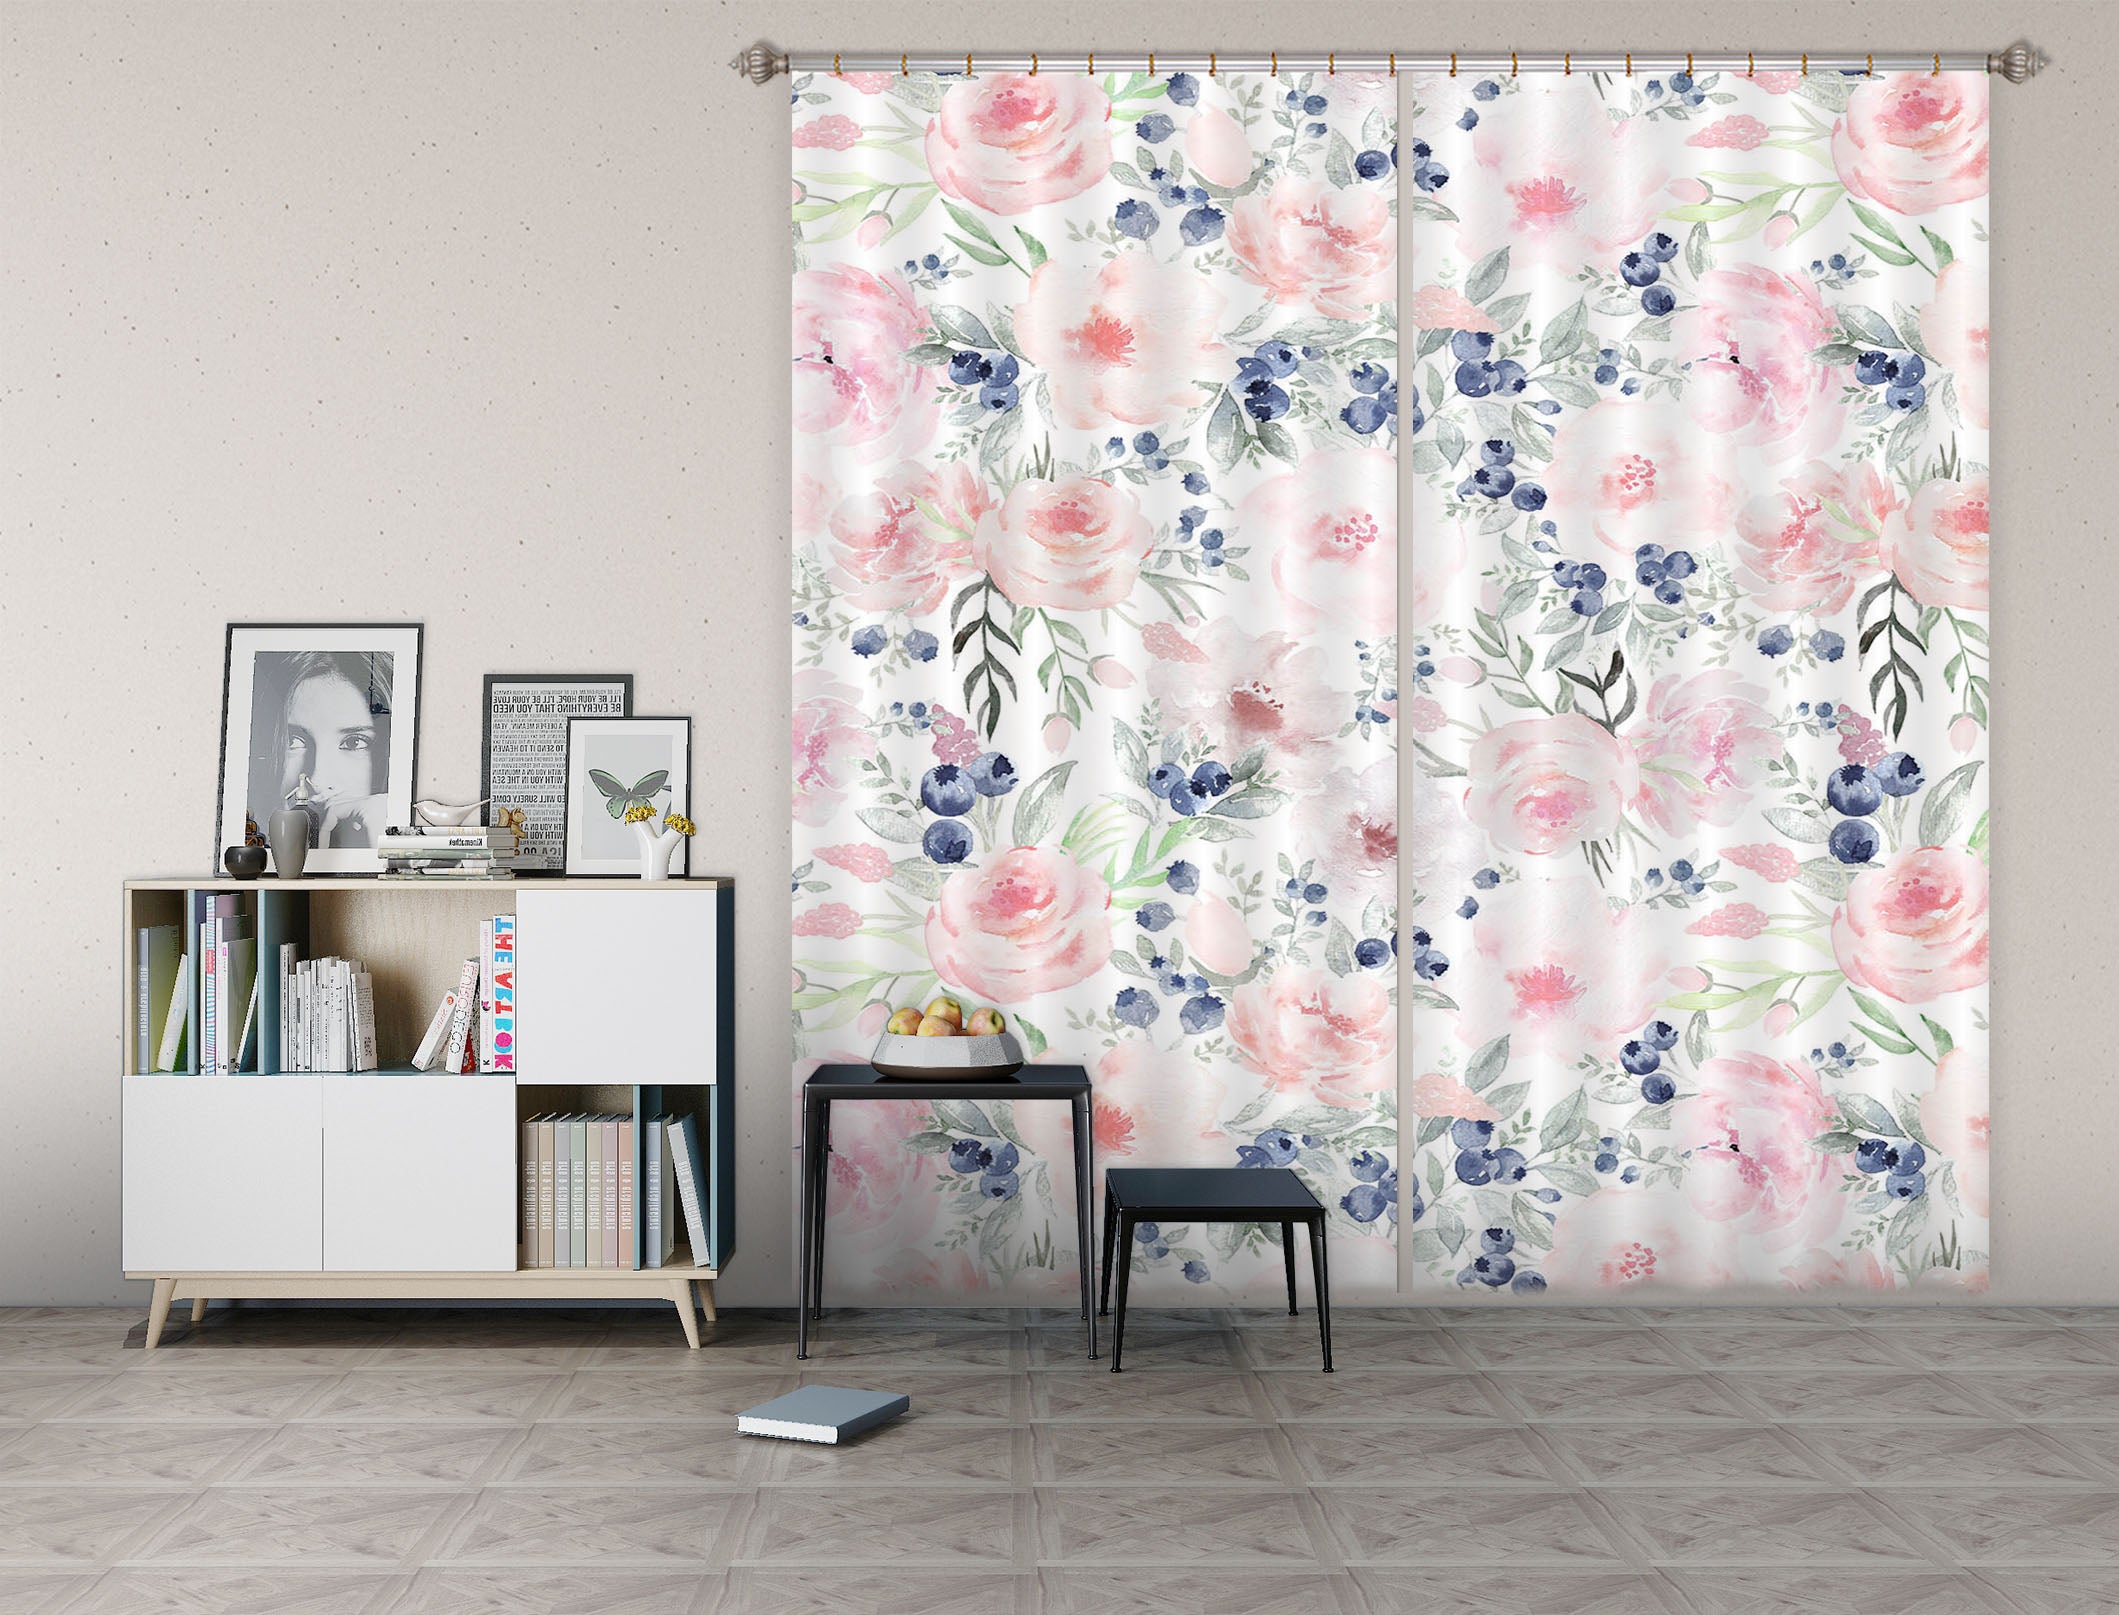 3D Blueberry Flower 268 Uta Naumann Curtain Curtains Drapes